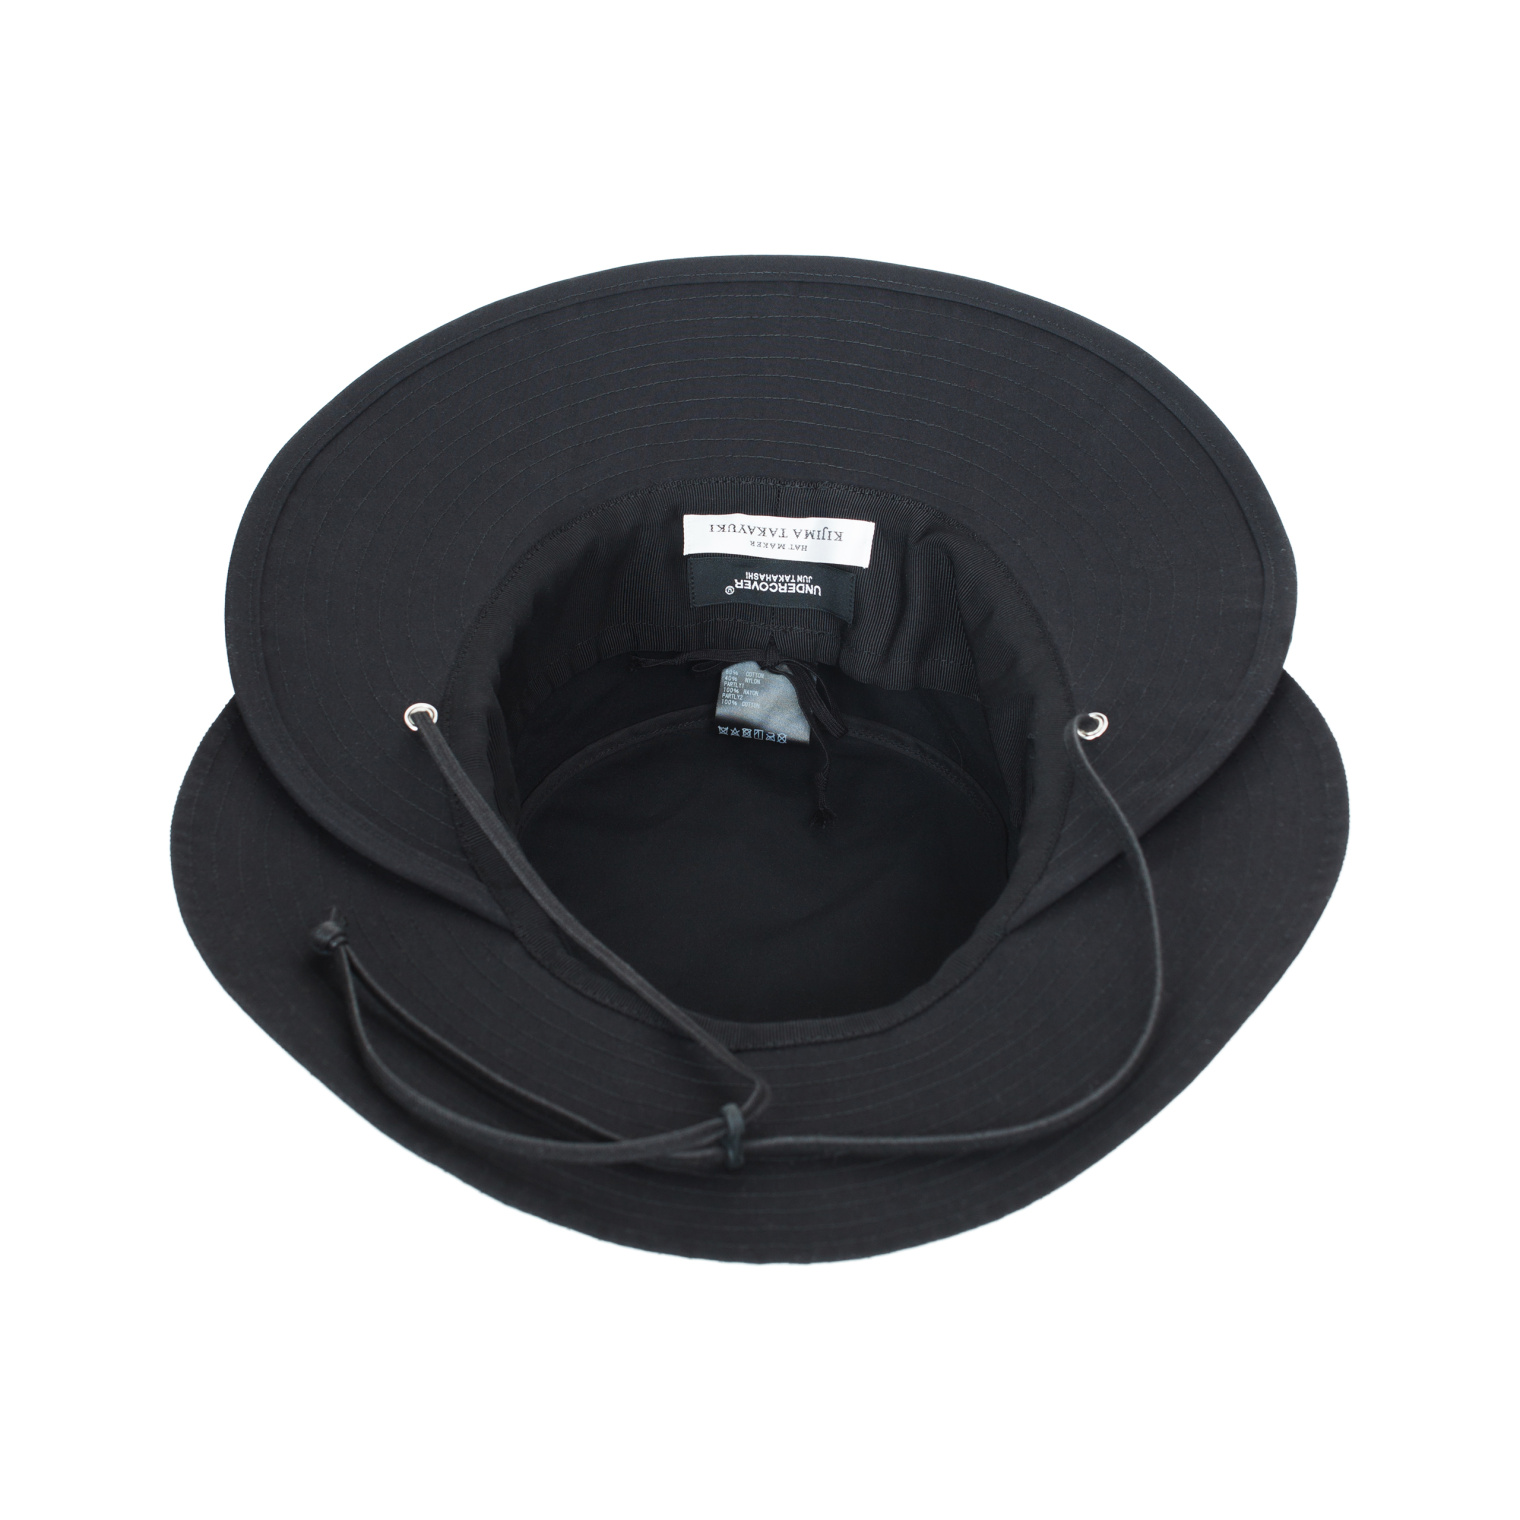 Buy Undercover women black bucket hat for $380 online on SV77